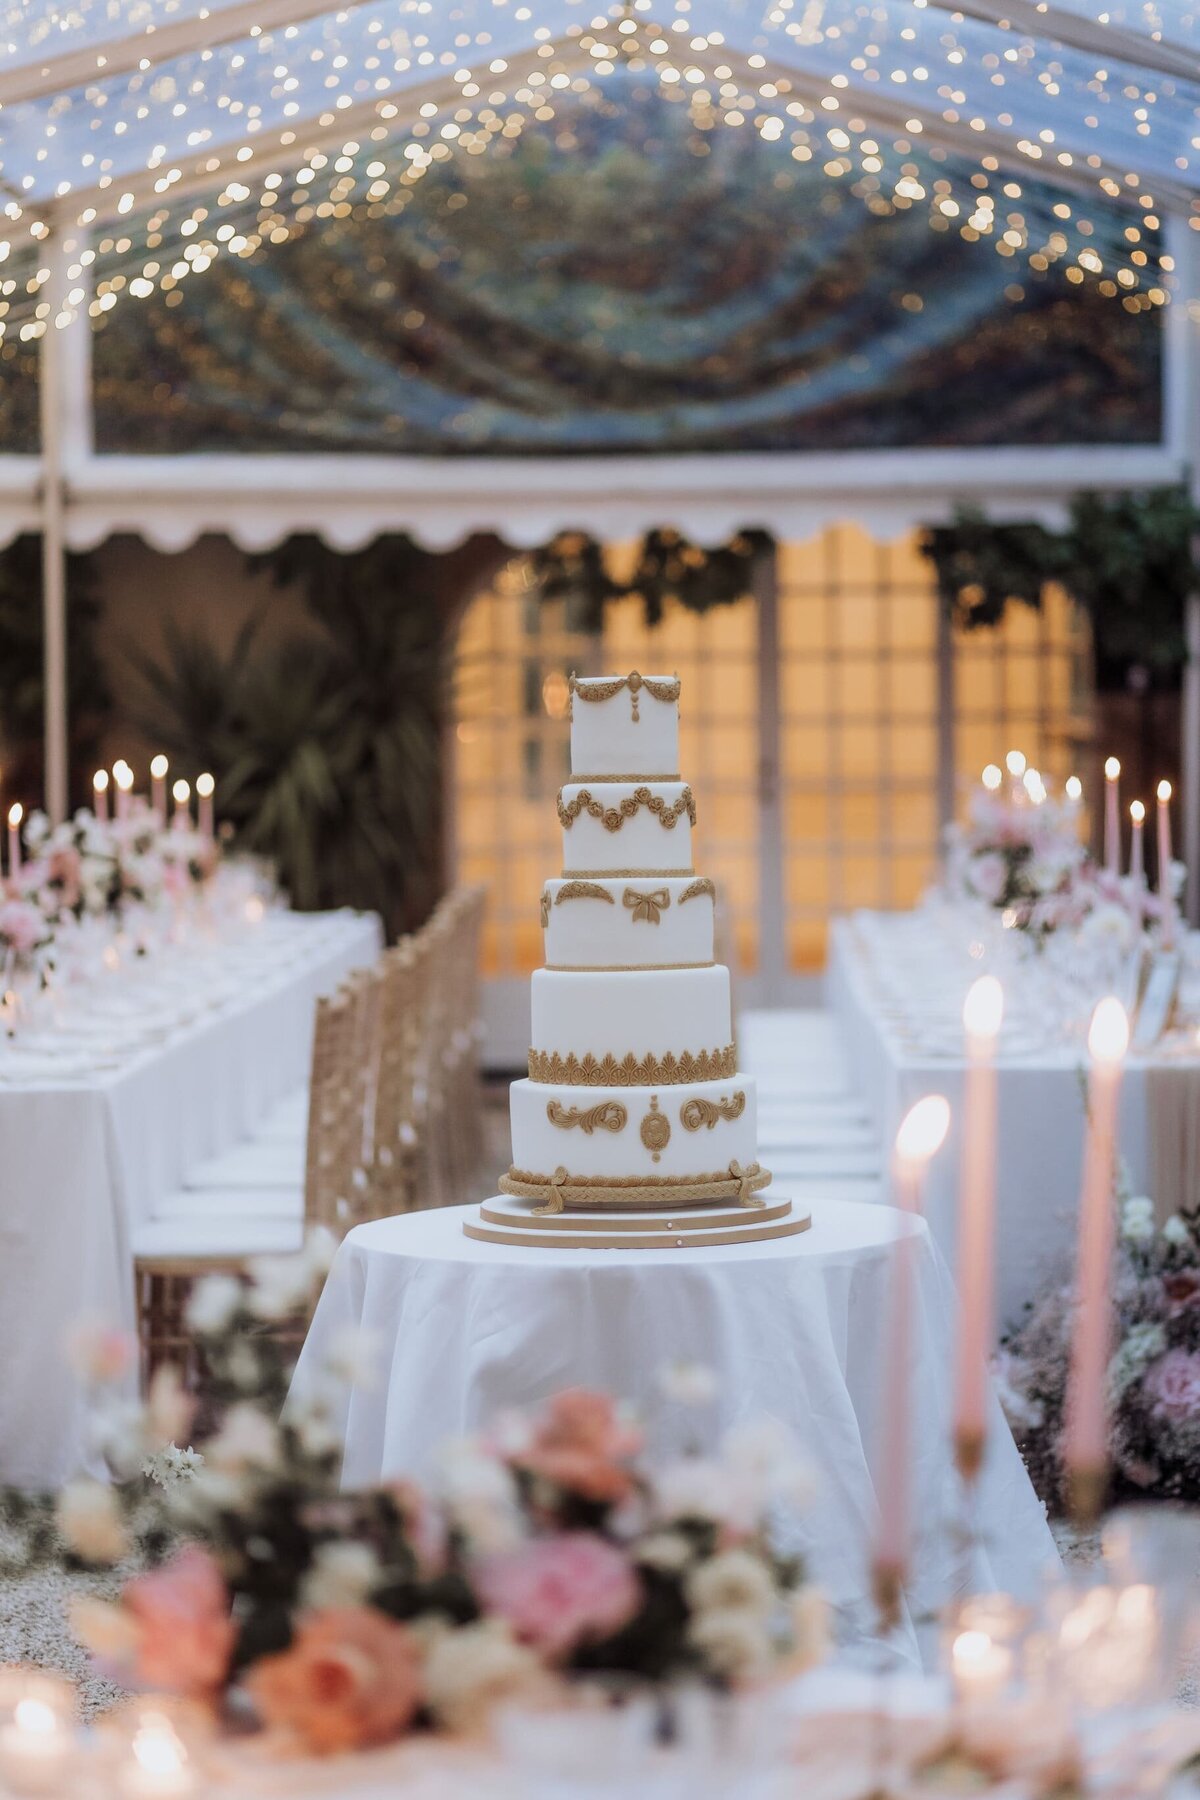 Whote-gold-wedding-cake-France